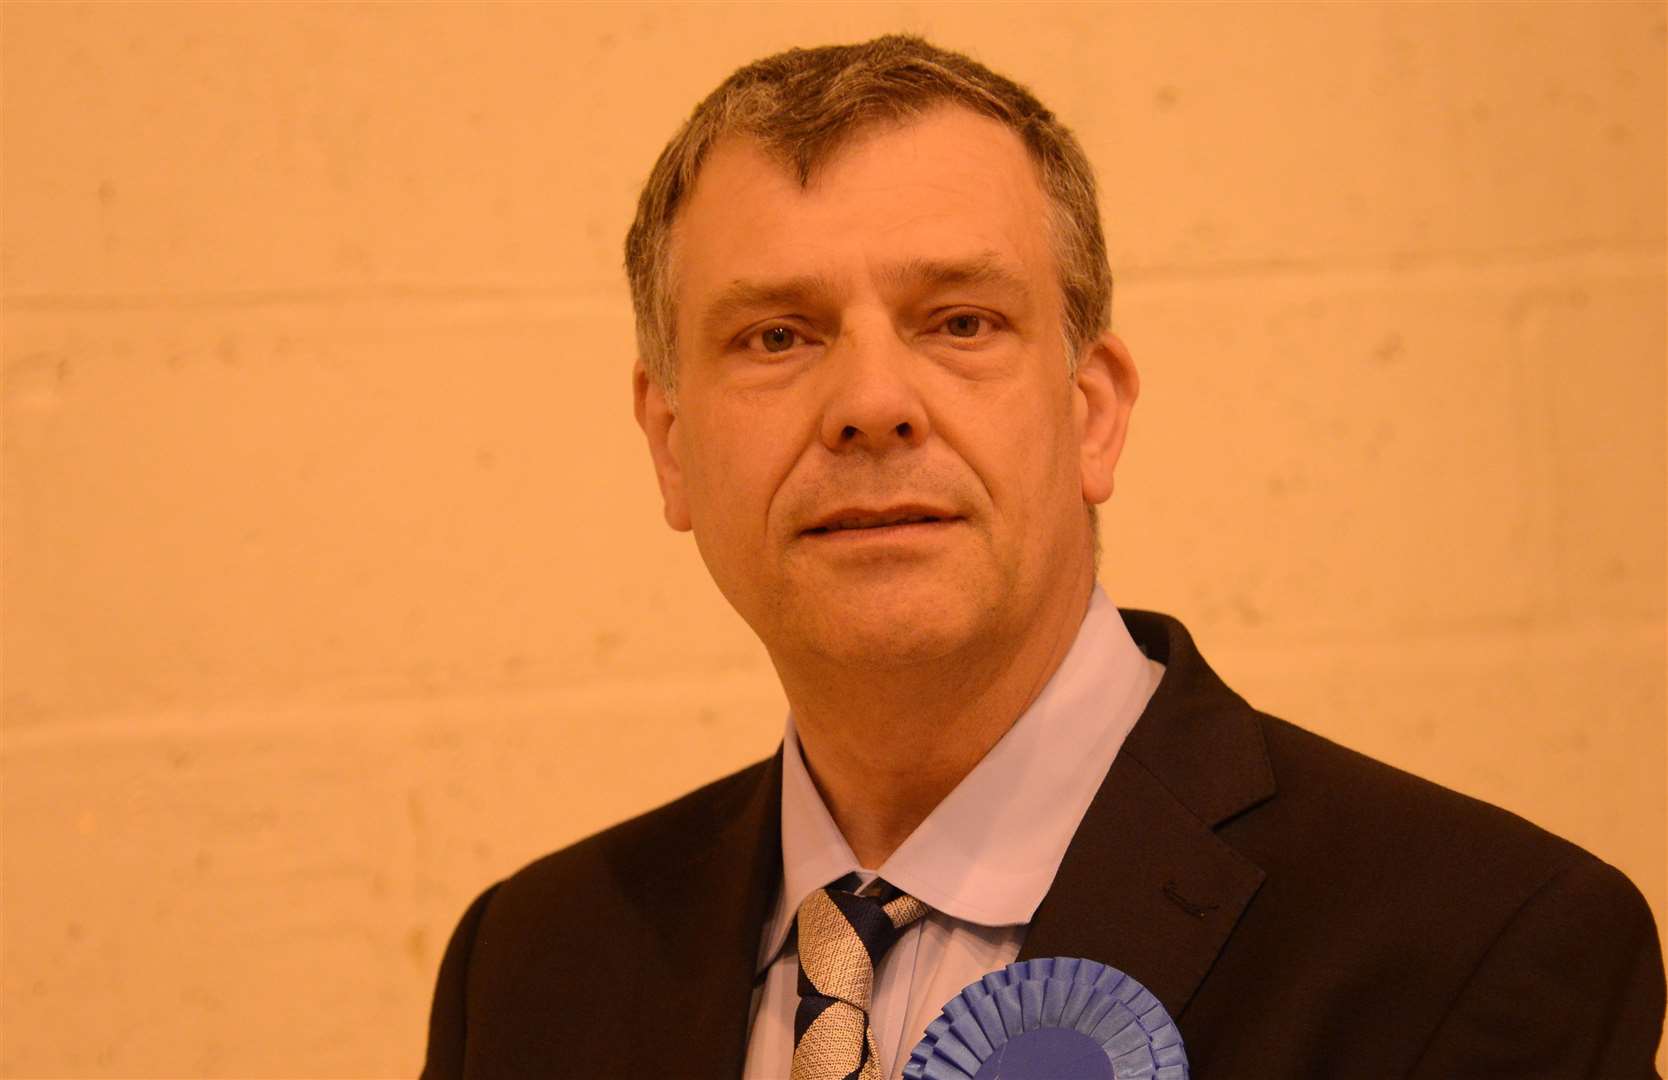 Cllr Paul Bartlett, Ashford Borough Council's deputy leader